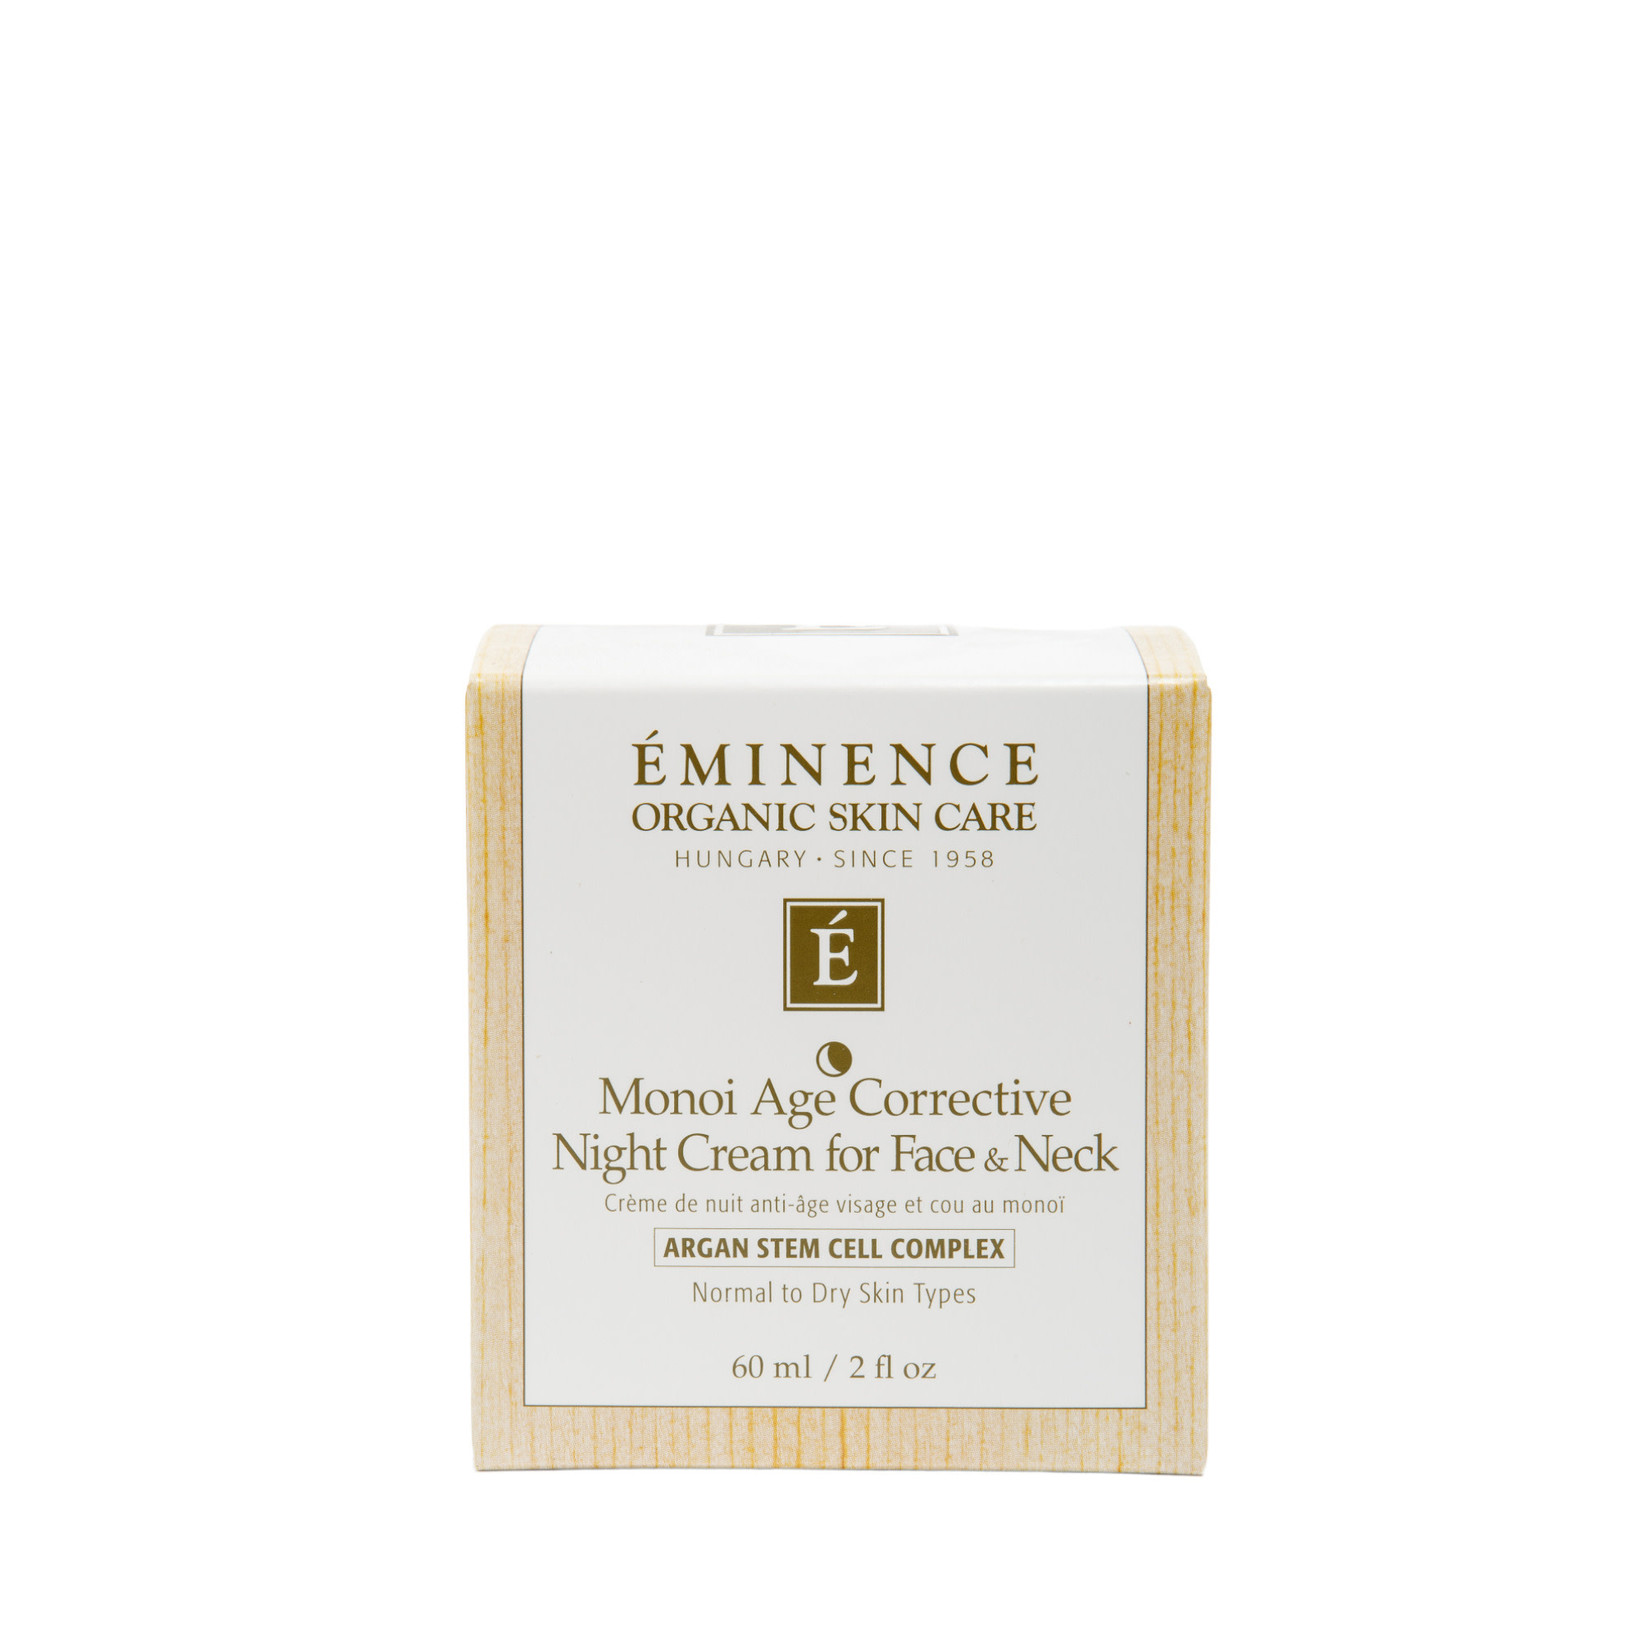 Eminence Monoi Age Corrective Night Cream for Face & Neck 2oz Eminence